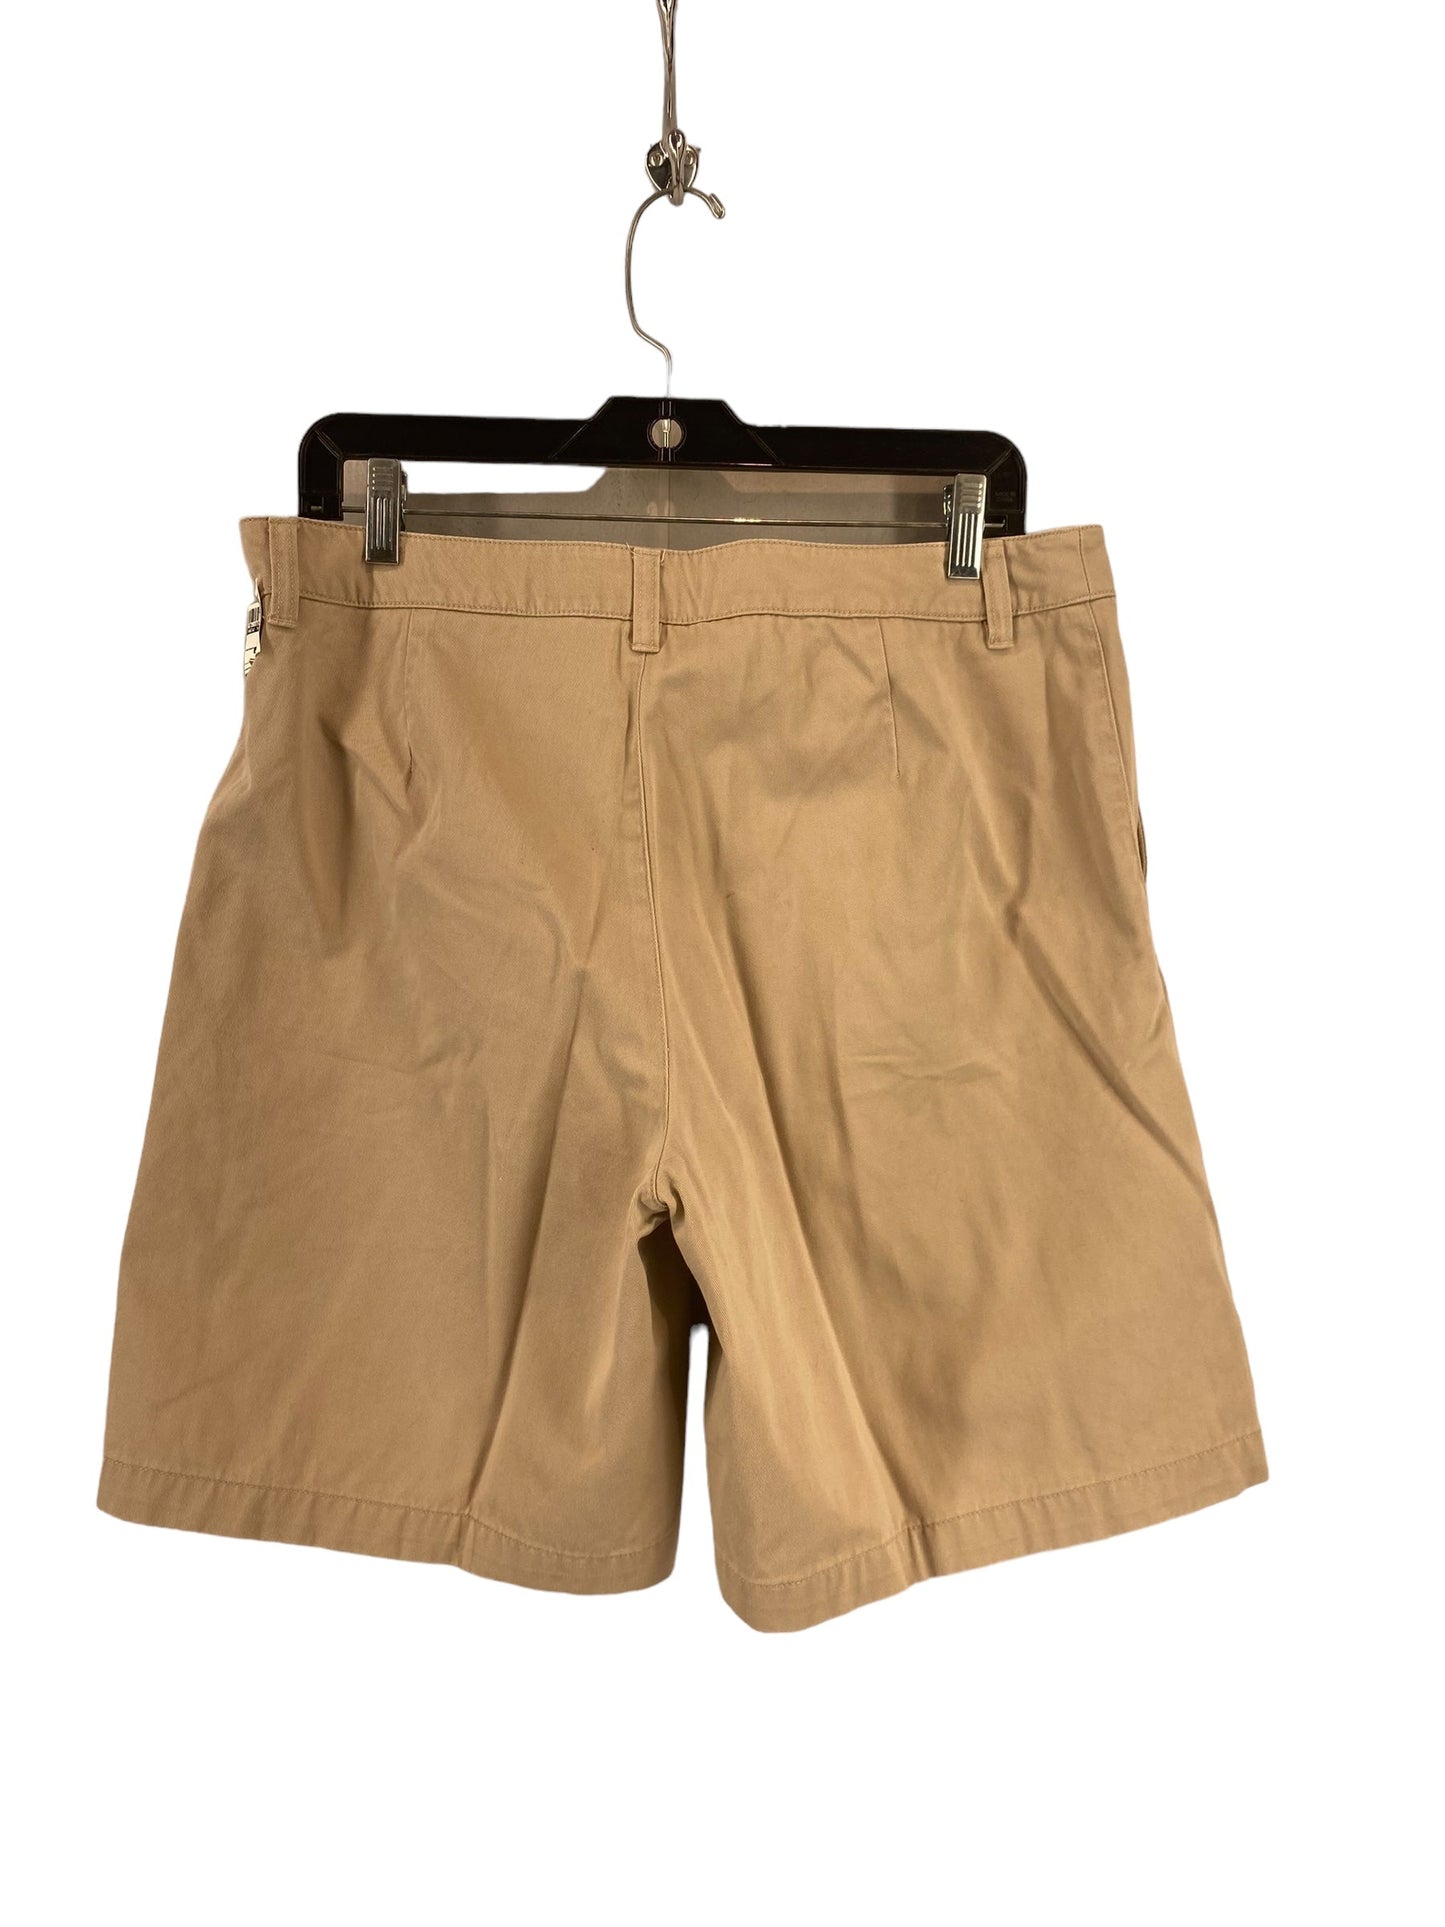 Tan Shorts Jones New York, Size 12